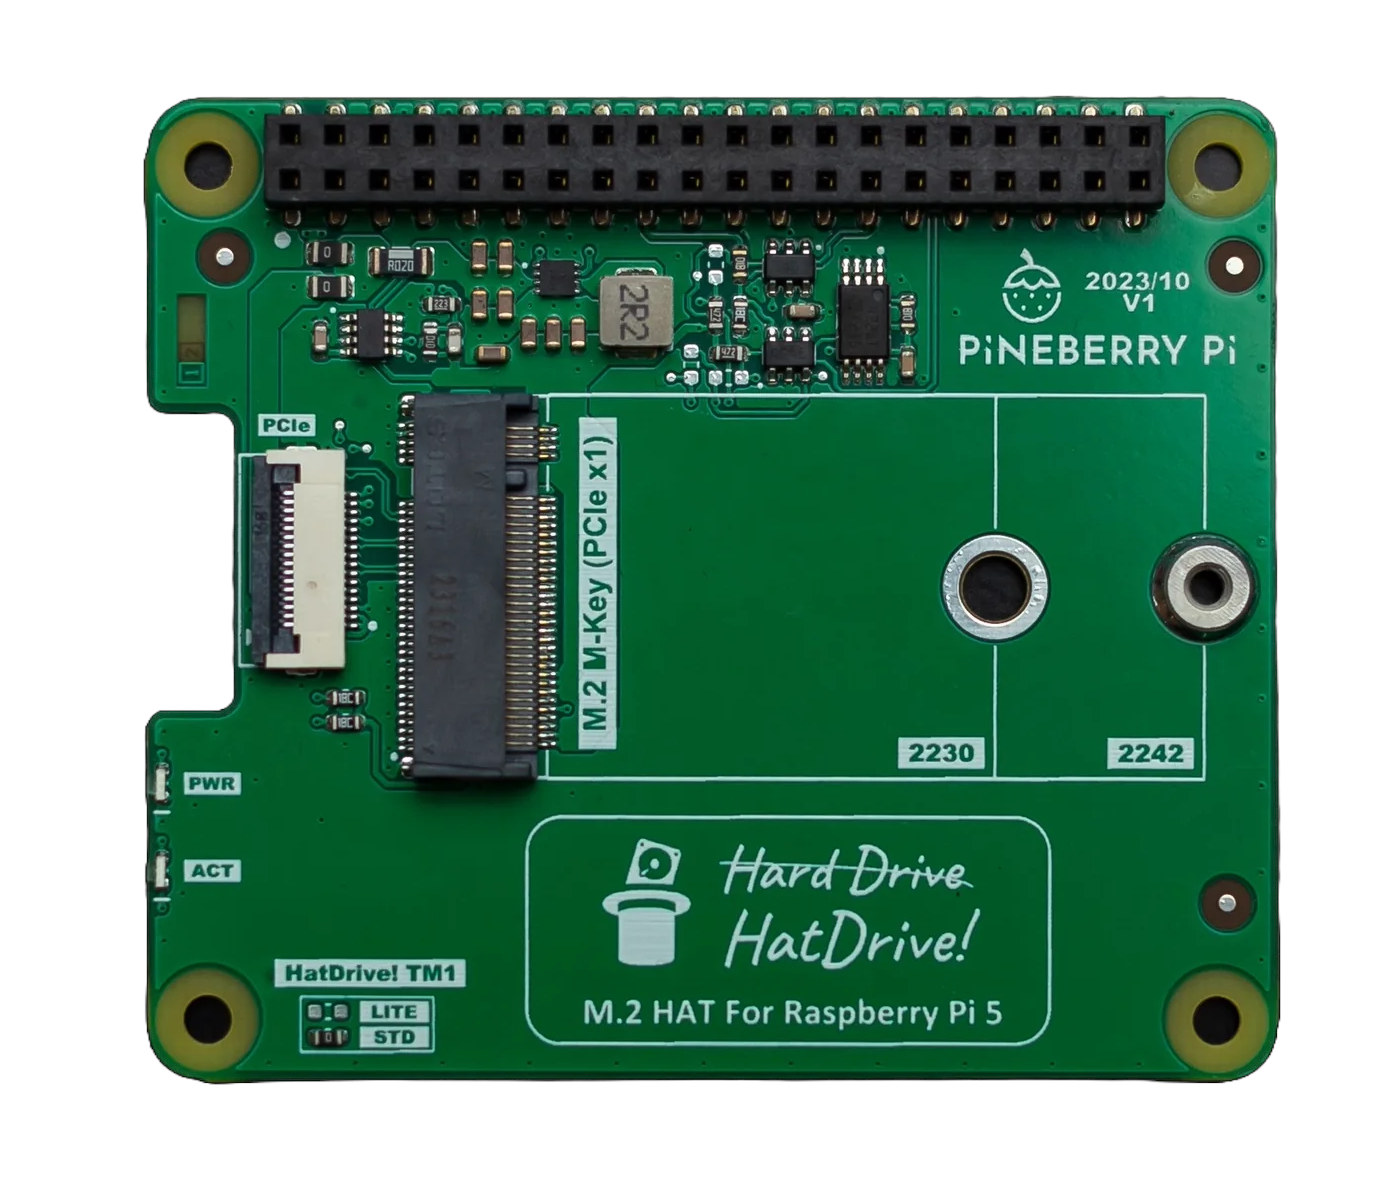 Introducing: Raspberry Pi 5! - Raspberry Pi